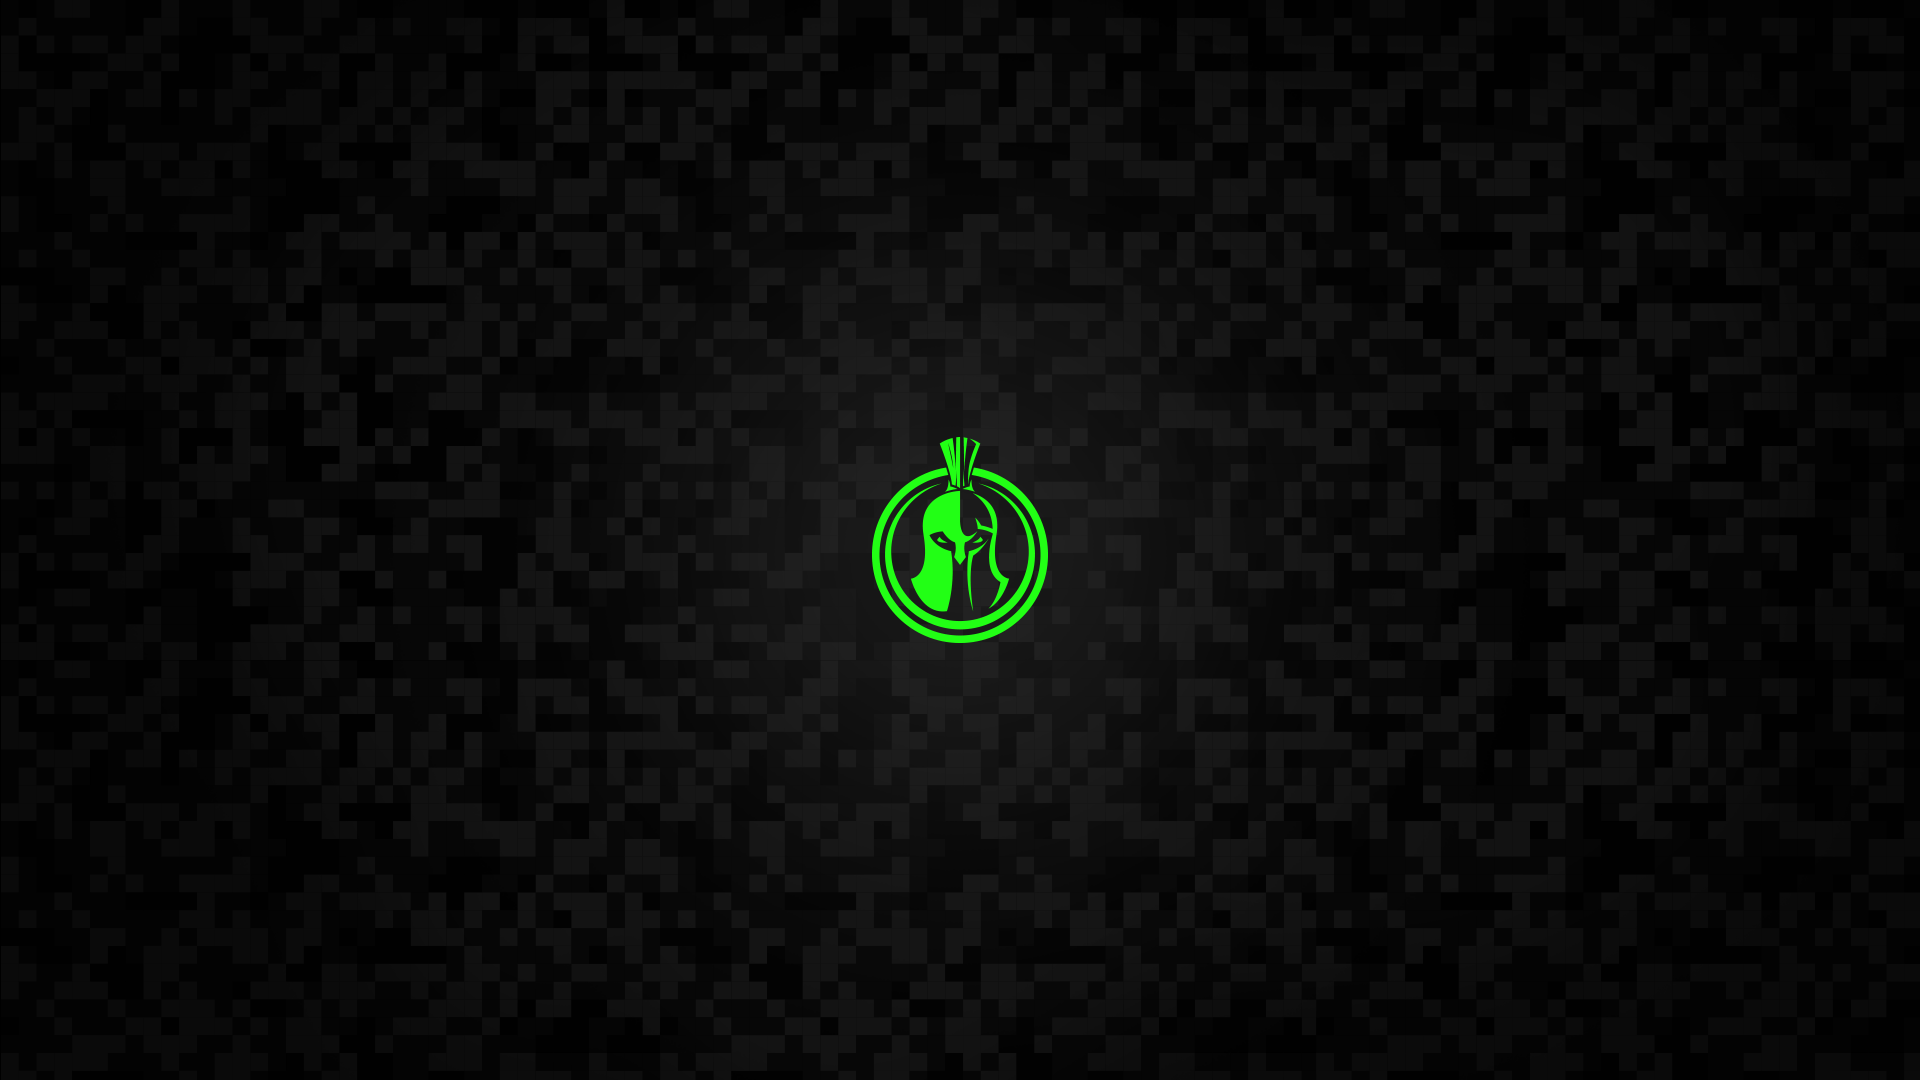 4Gamers Game Gear Minimalism Black Background Green 1920x1080